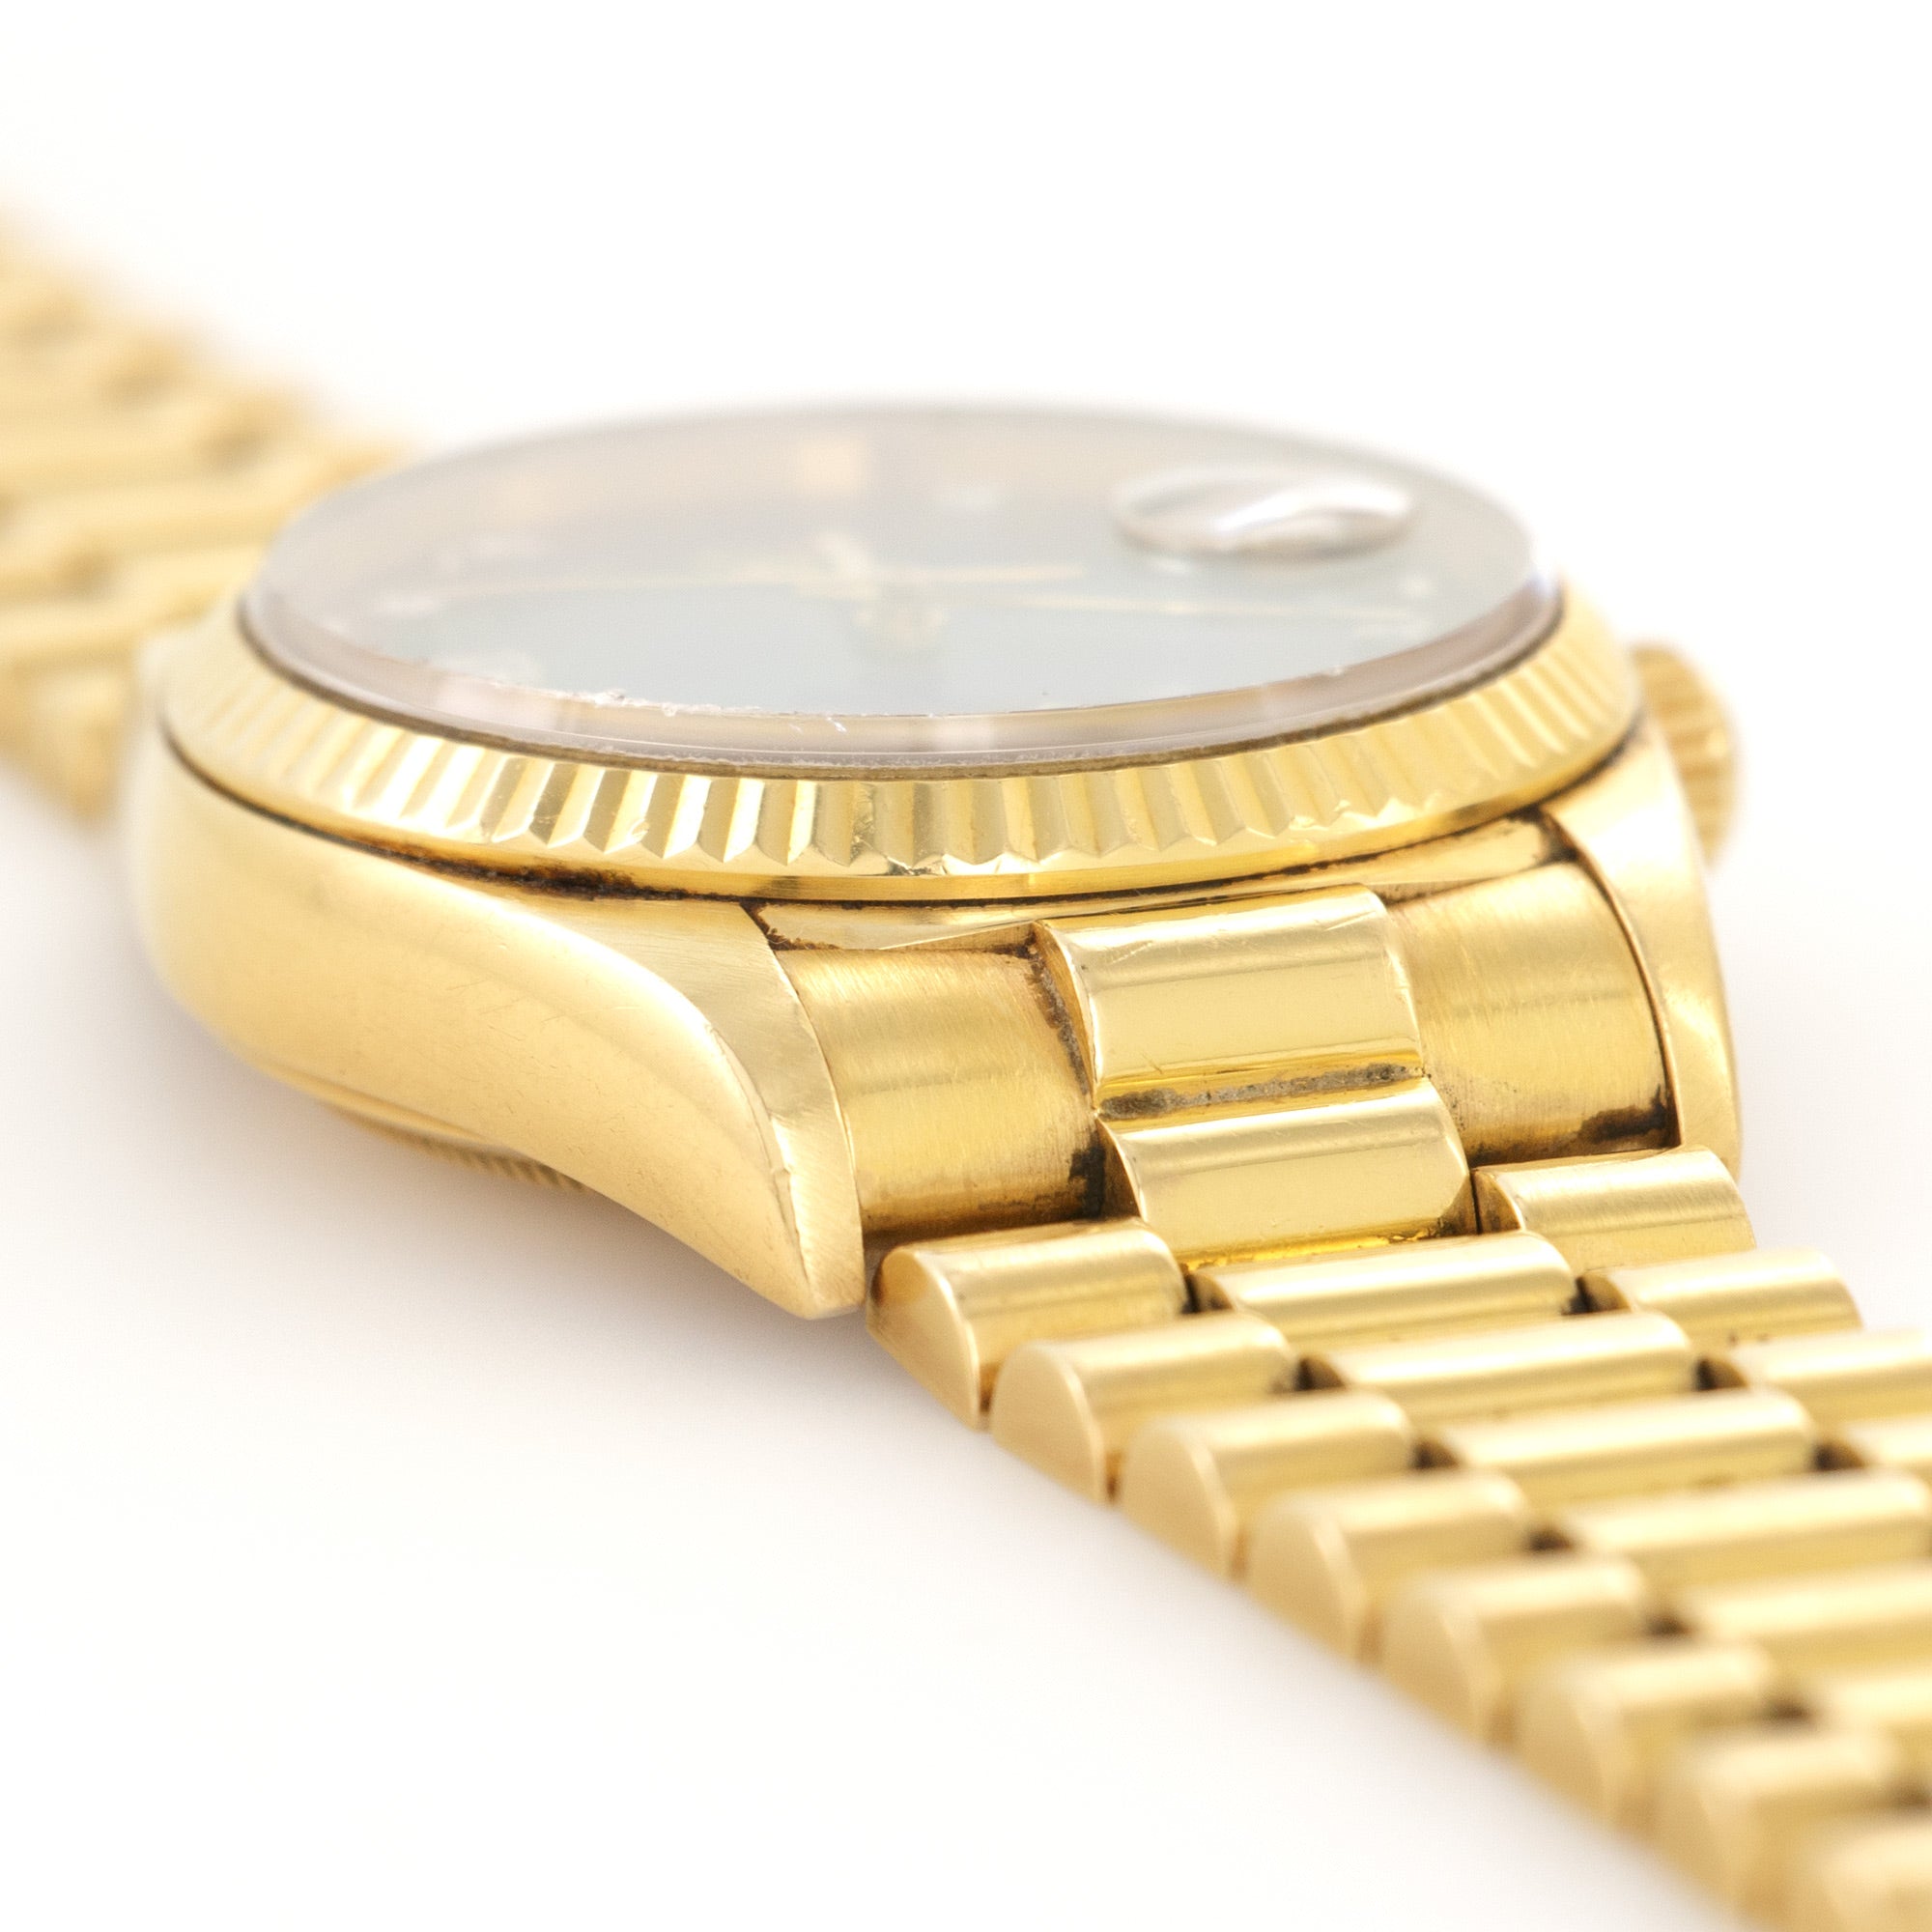 Rolex - Rolex Yellow Gold Day-Date Blue Vignette Diamond Watch - The Keystone Watches